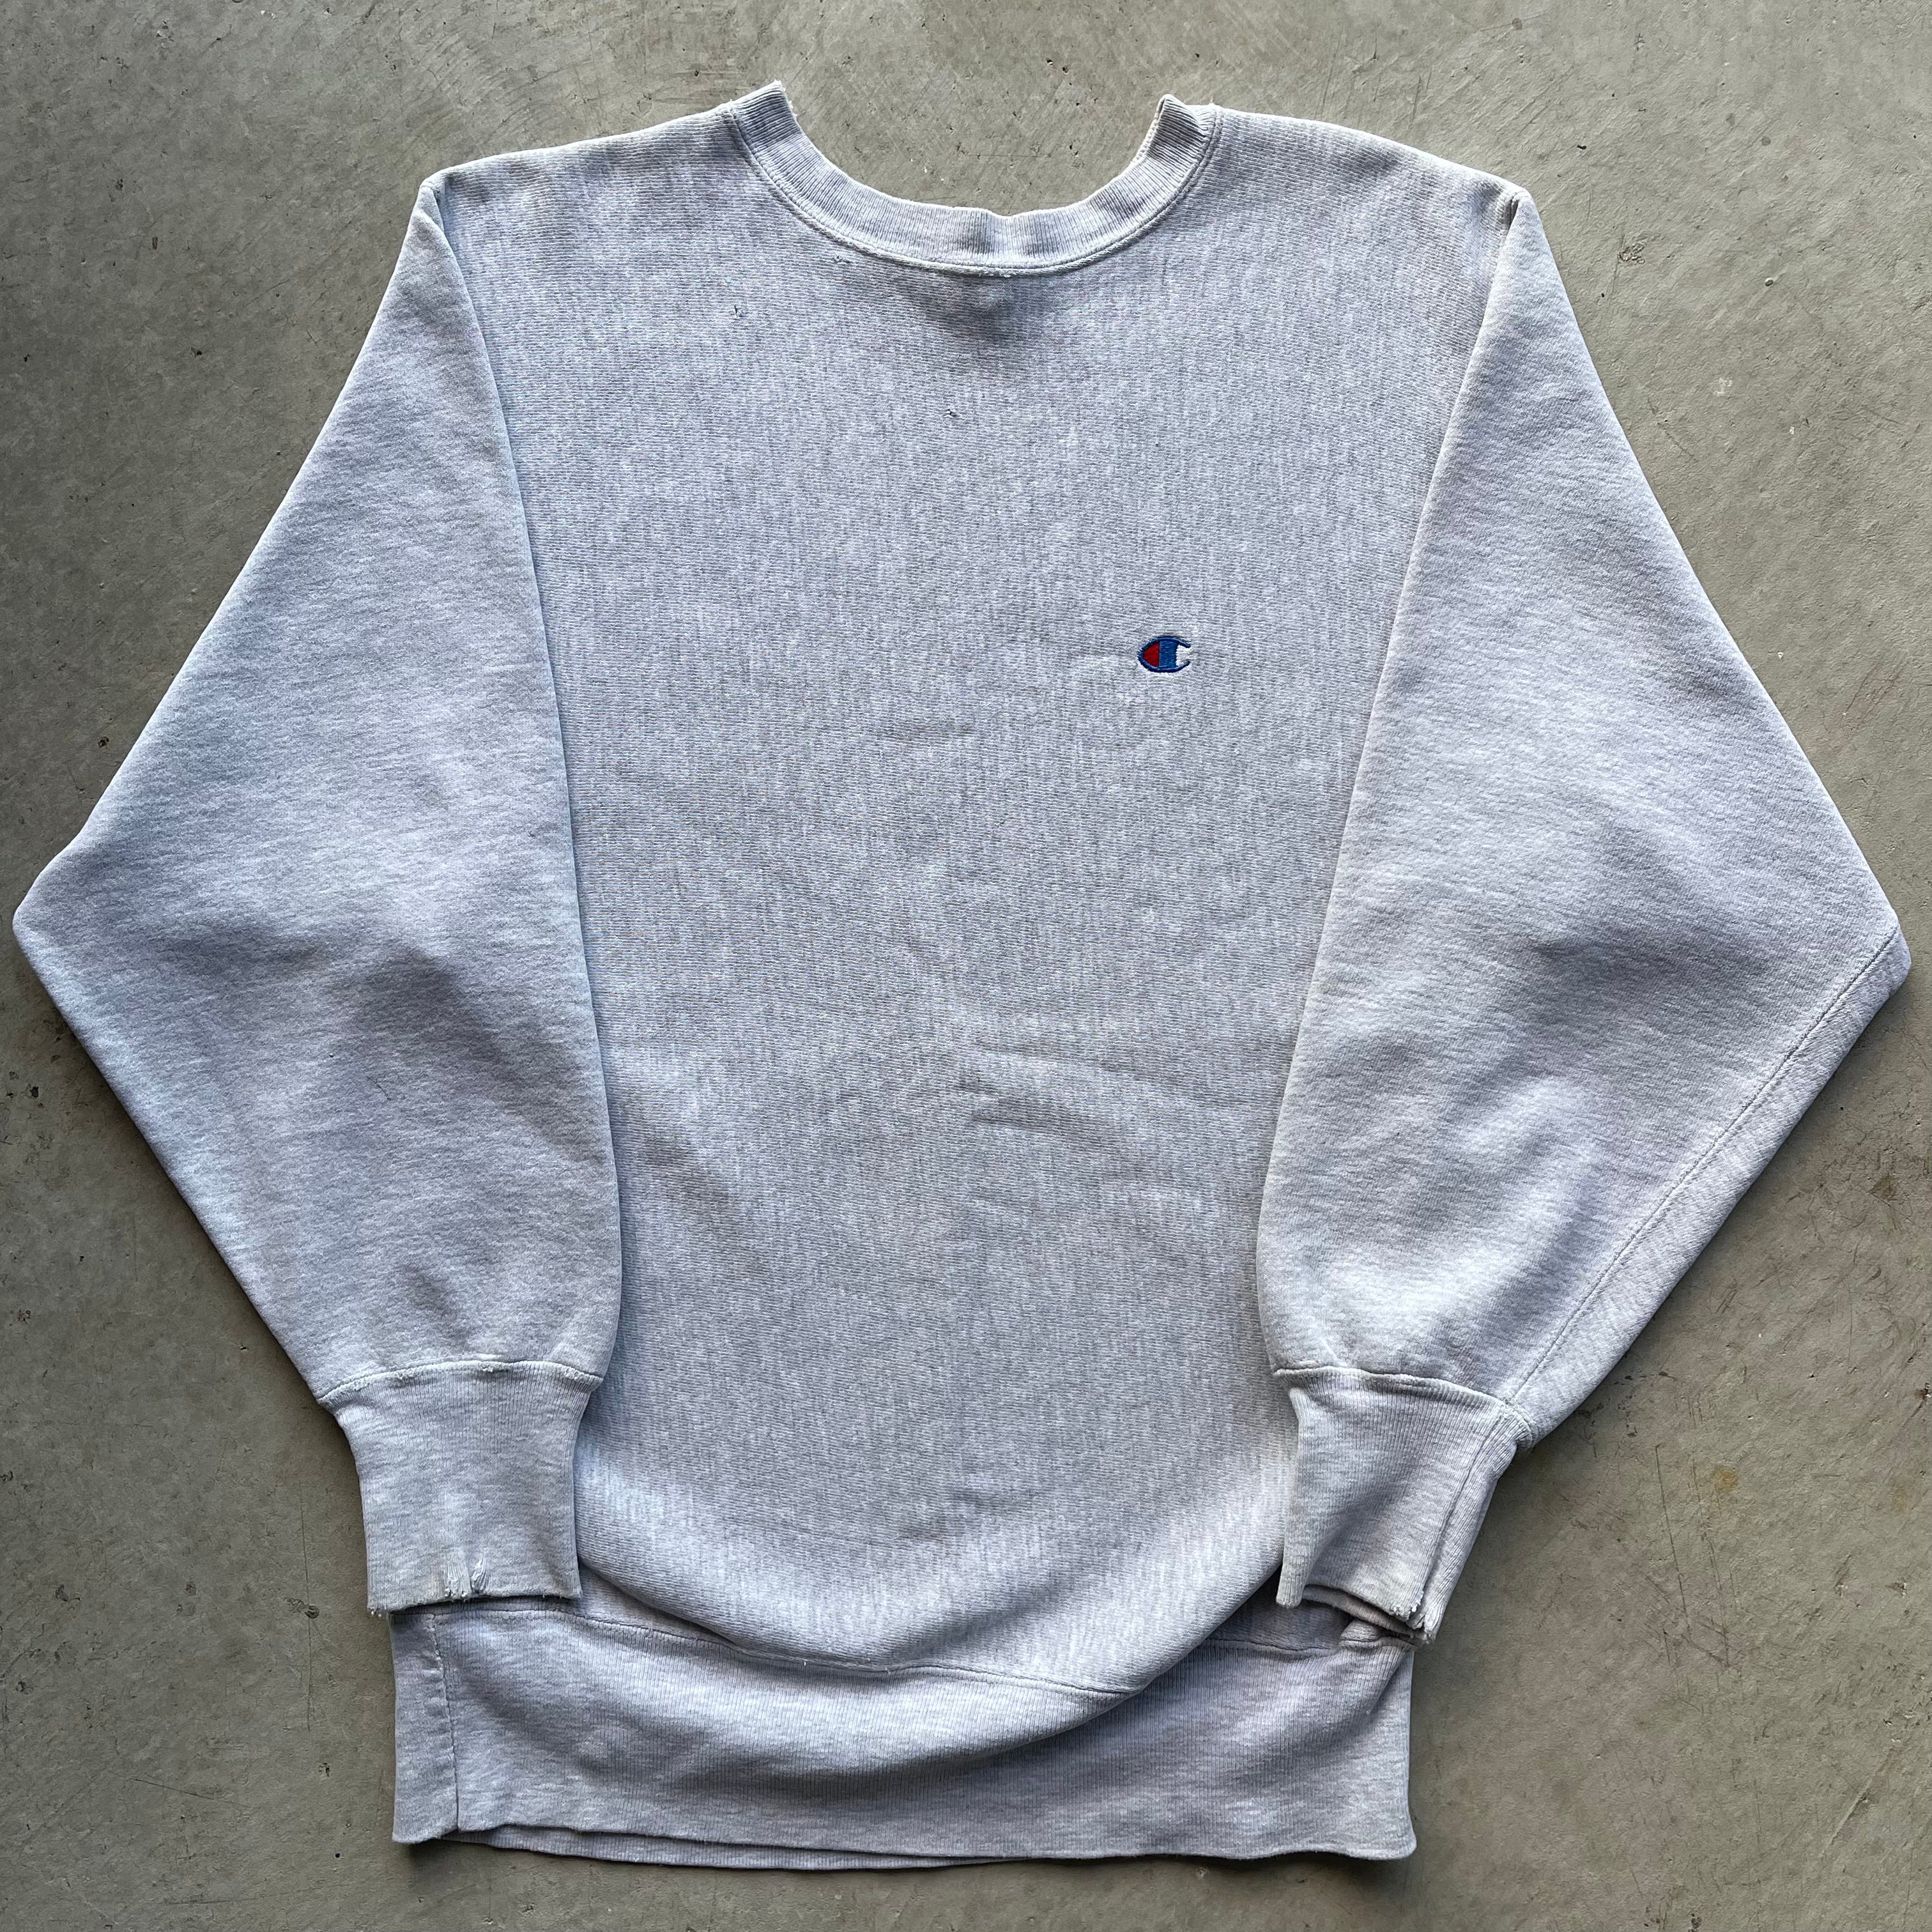 Champion Reverse Weave Crewneck Sweatshirt, Product